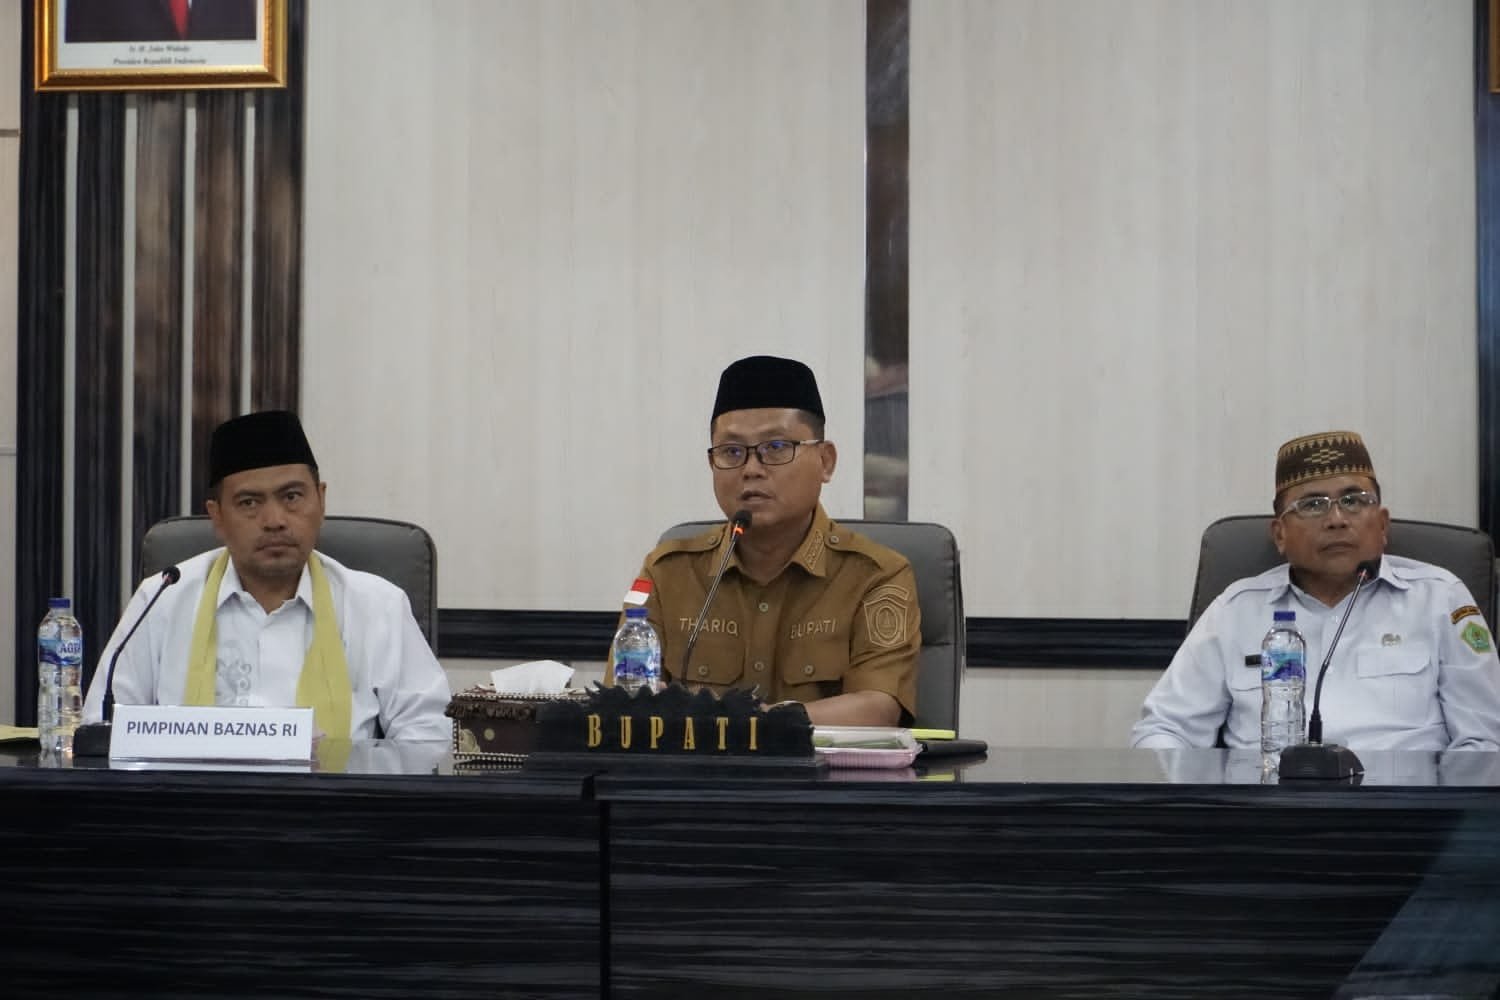 Bupati Gorontalo Utara Thariq Modanggu saat menerima kunjungan kerja pimpinan BAZNAS RI